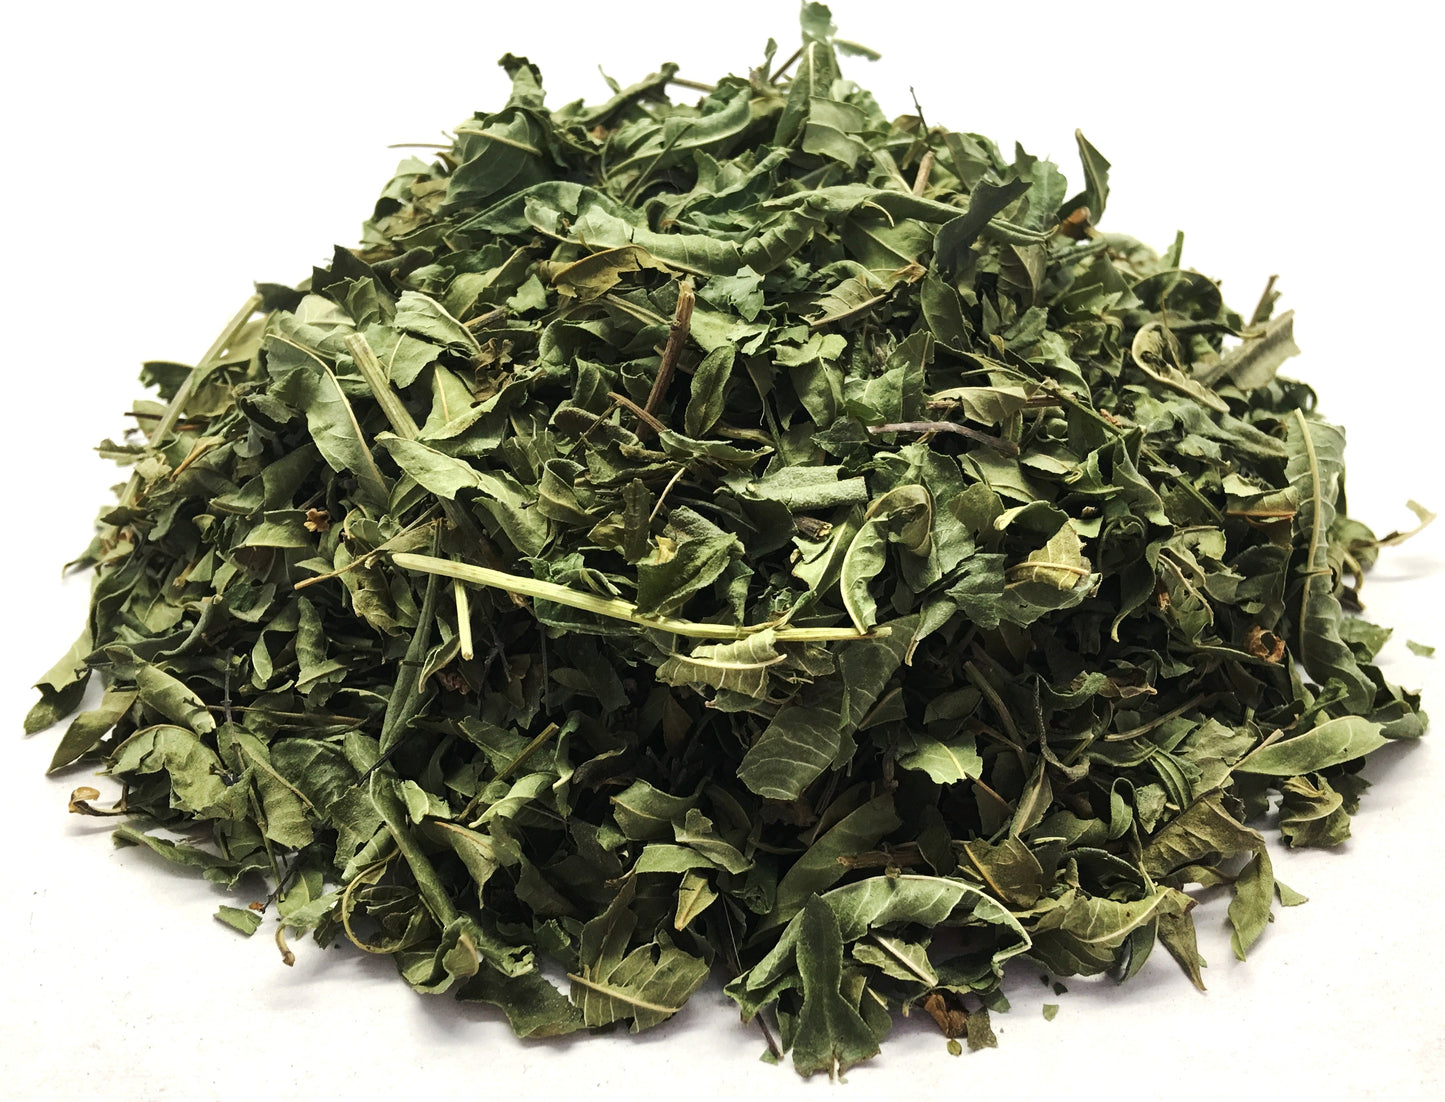 Cedron Tea Herbal Infusion Lemon Verbena Value Pack